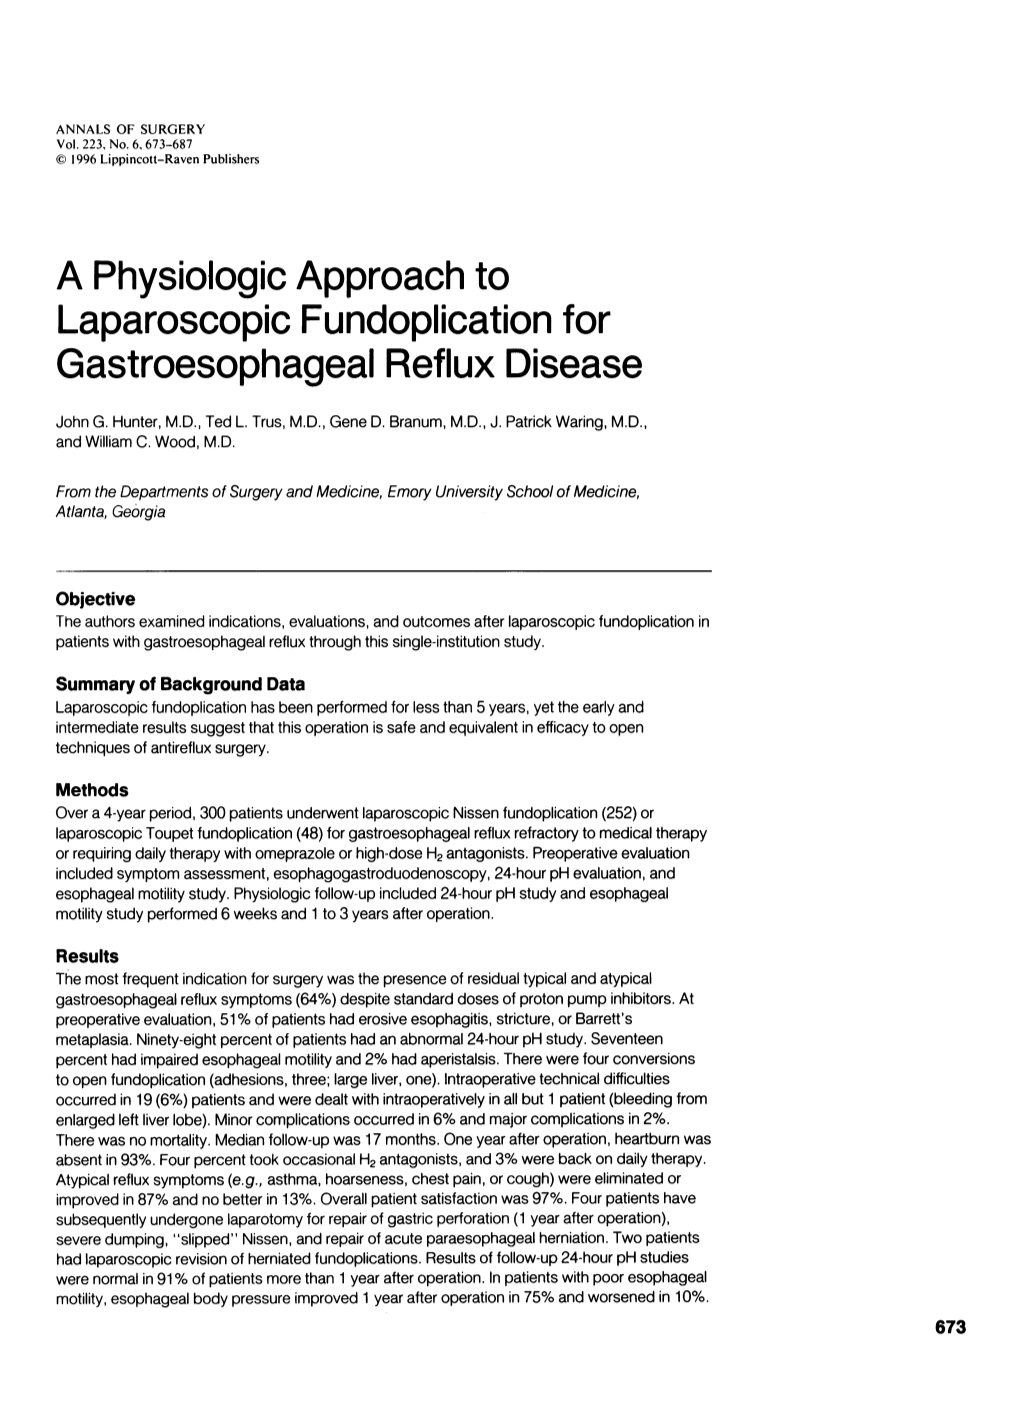 A Physiologic Approach to Laparoscopic Fundoplication for Gastroesophageal Reflux Disease